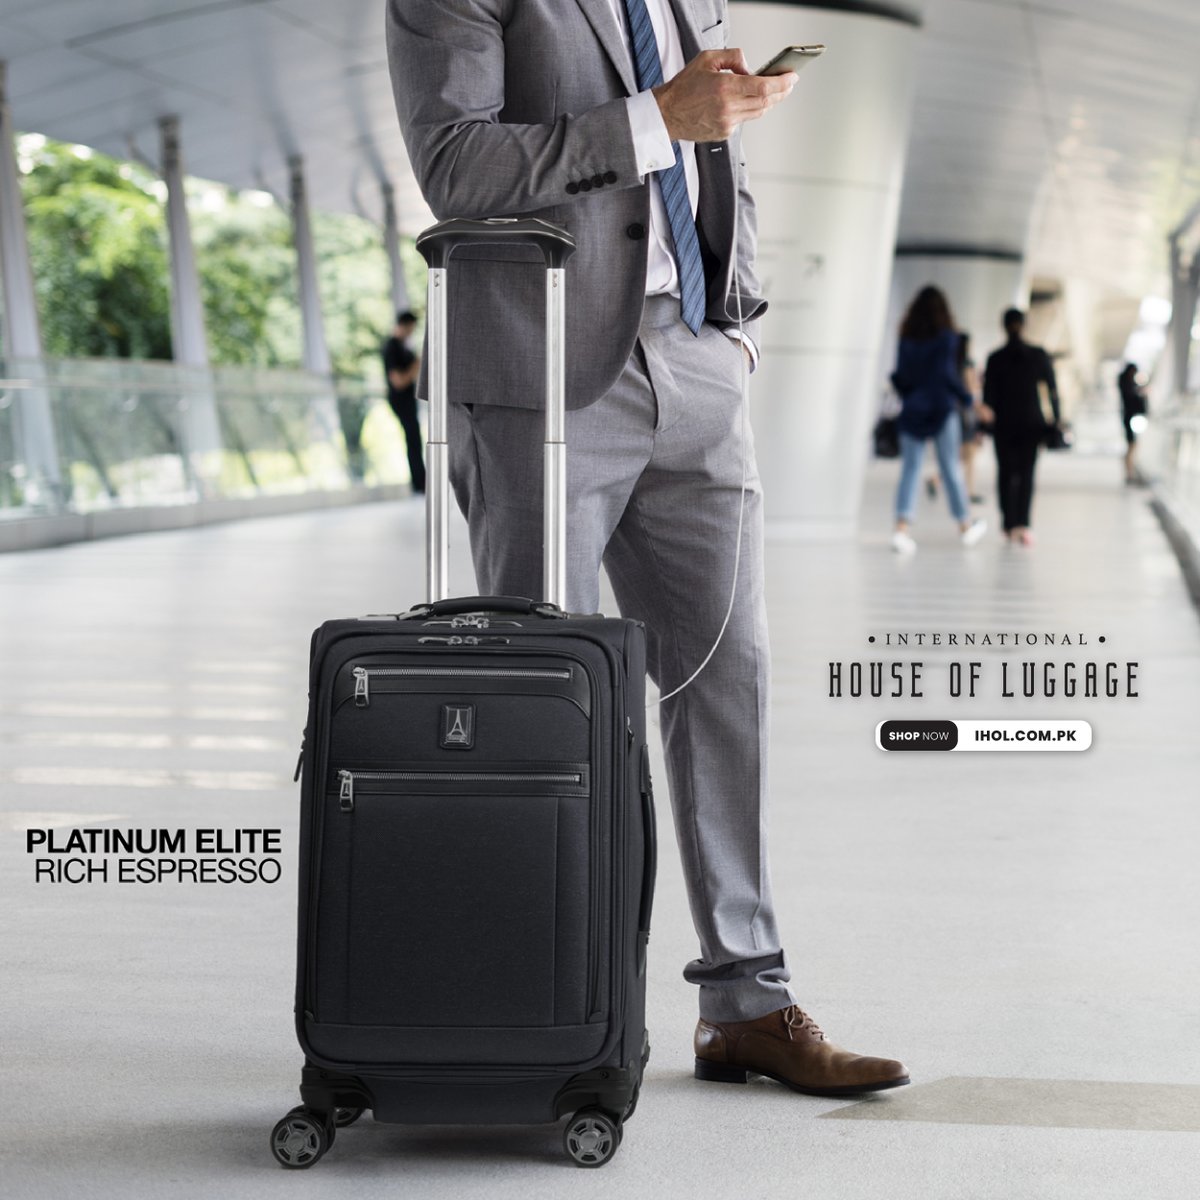 Travelpro Platinum Elite Spinner Trolley Bag
— Best carry on Luggage

ihol.com.pk
ihol.com.pk/collections/tr…

#best #carryonluggage #travelpro #bags #suitcases #travelingbag #ihol #platinumelite